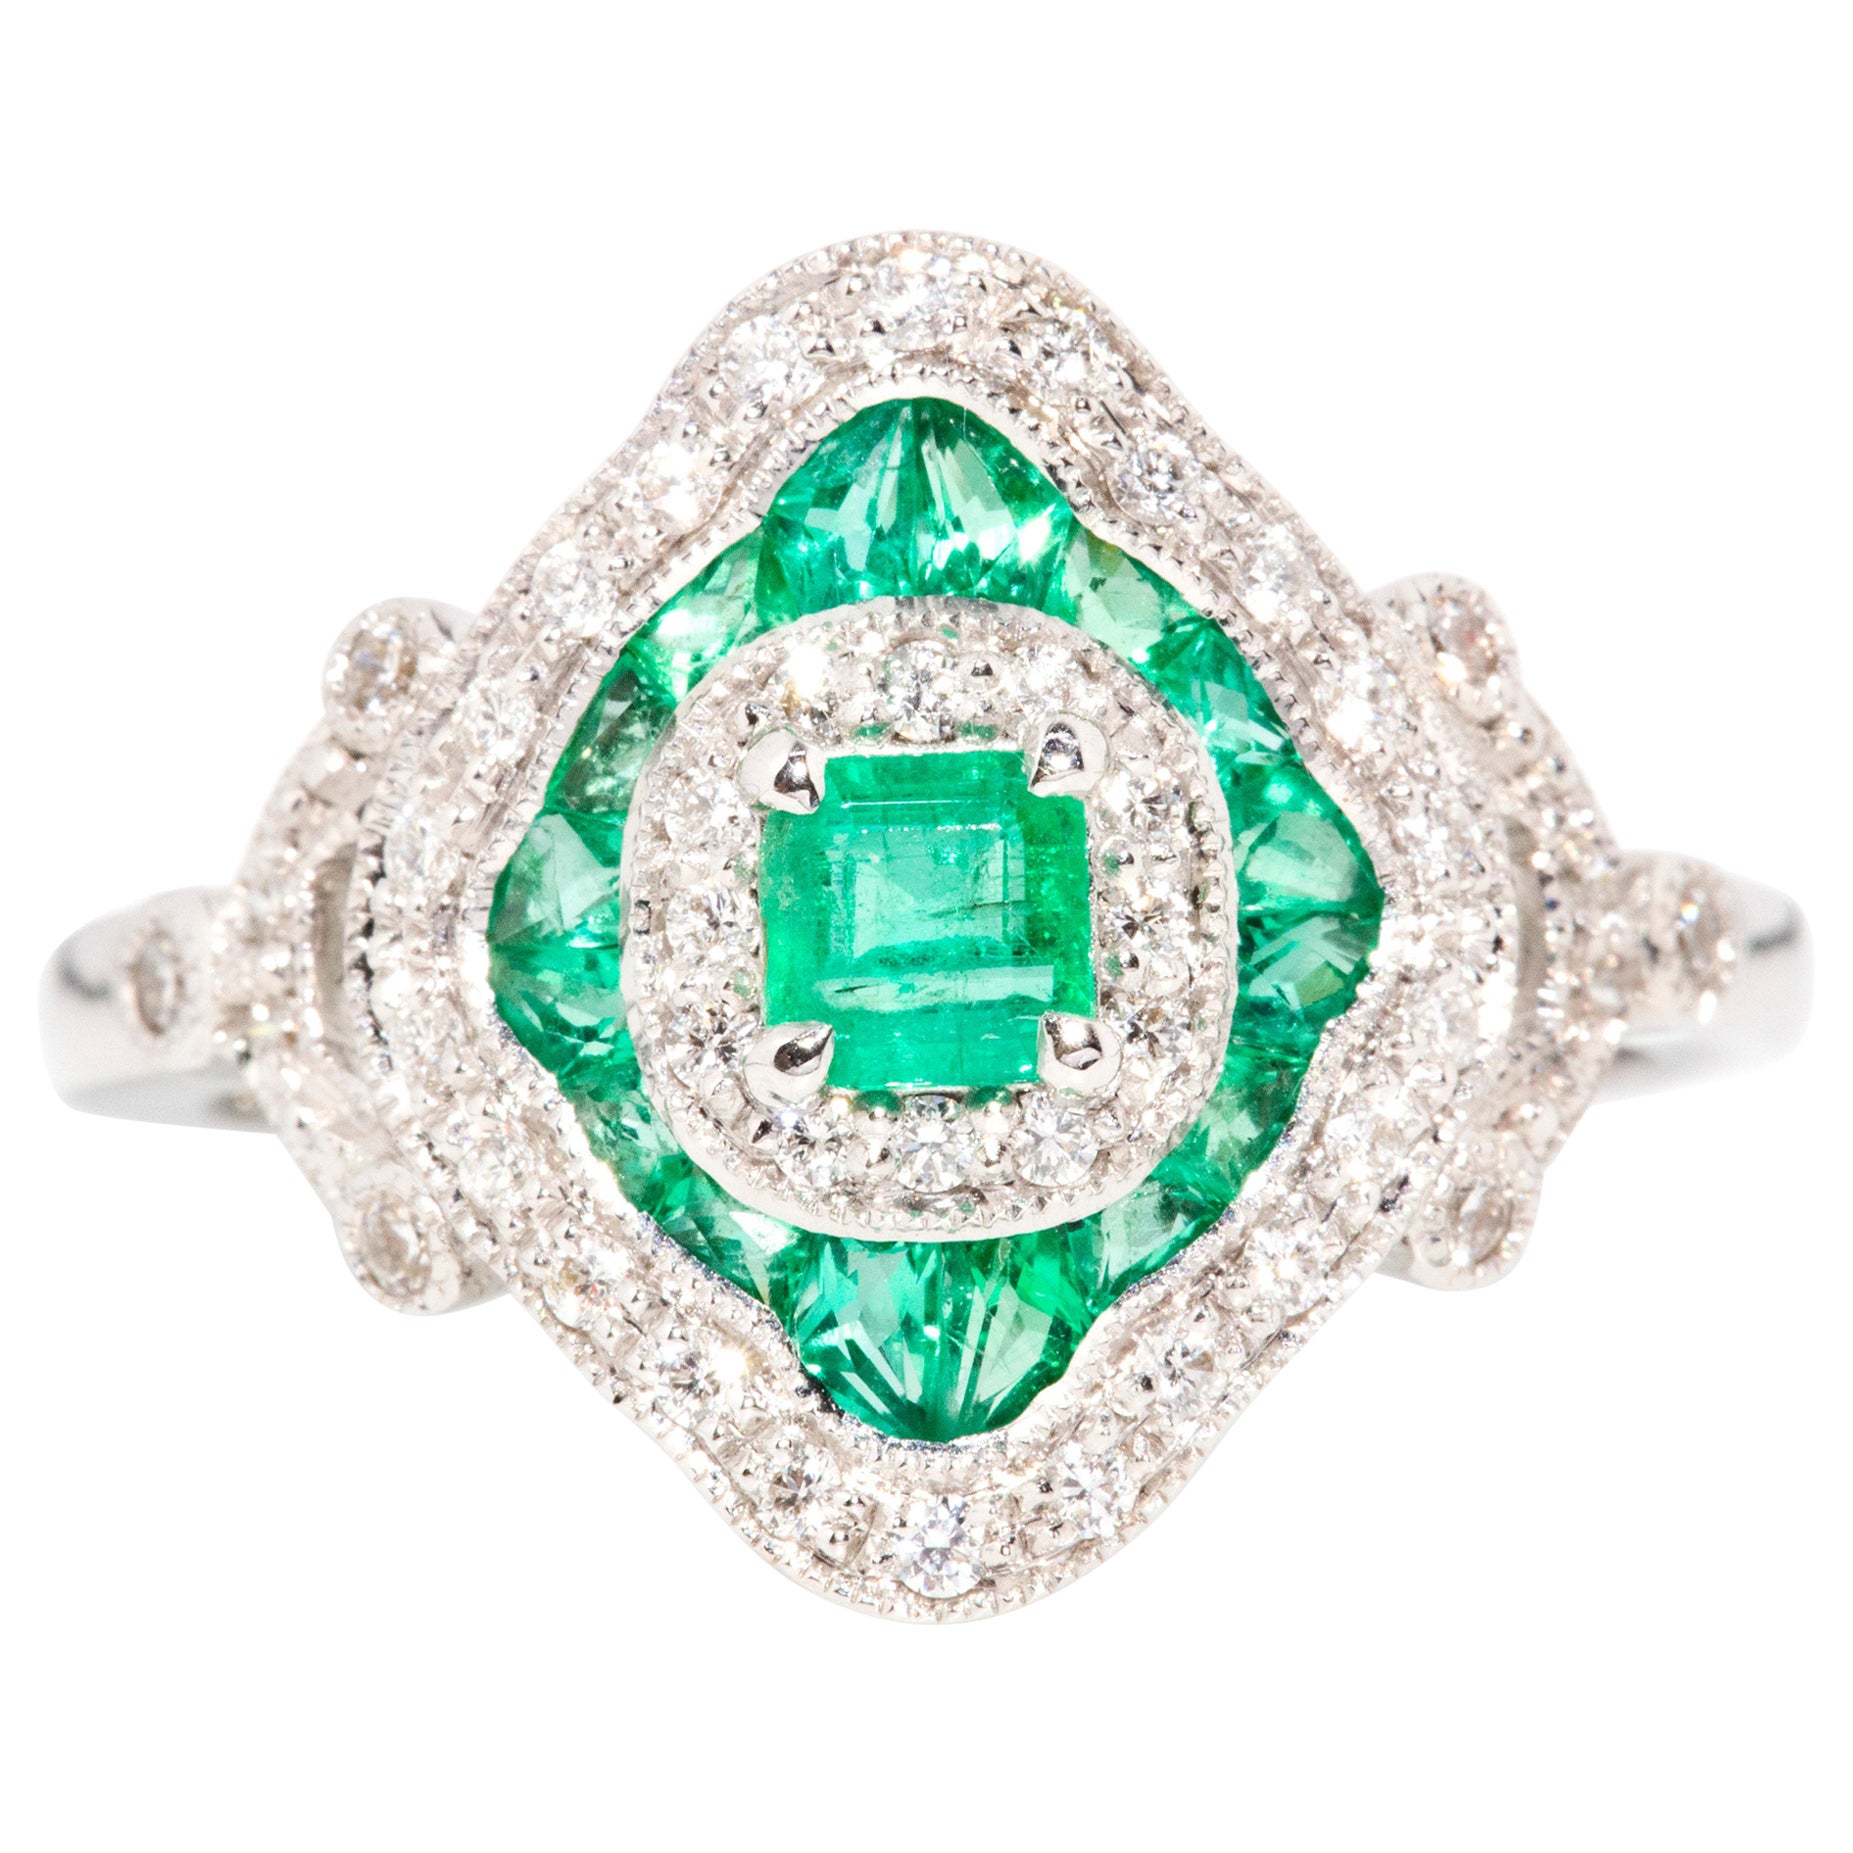 Contemporary Emerald & Diamond Art Deco-inspirierter Ring aus 18 Karat Weißgold